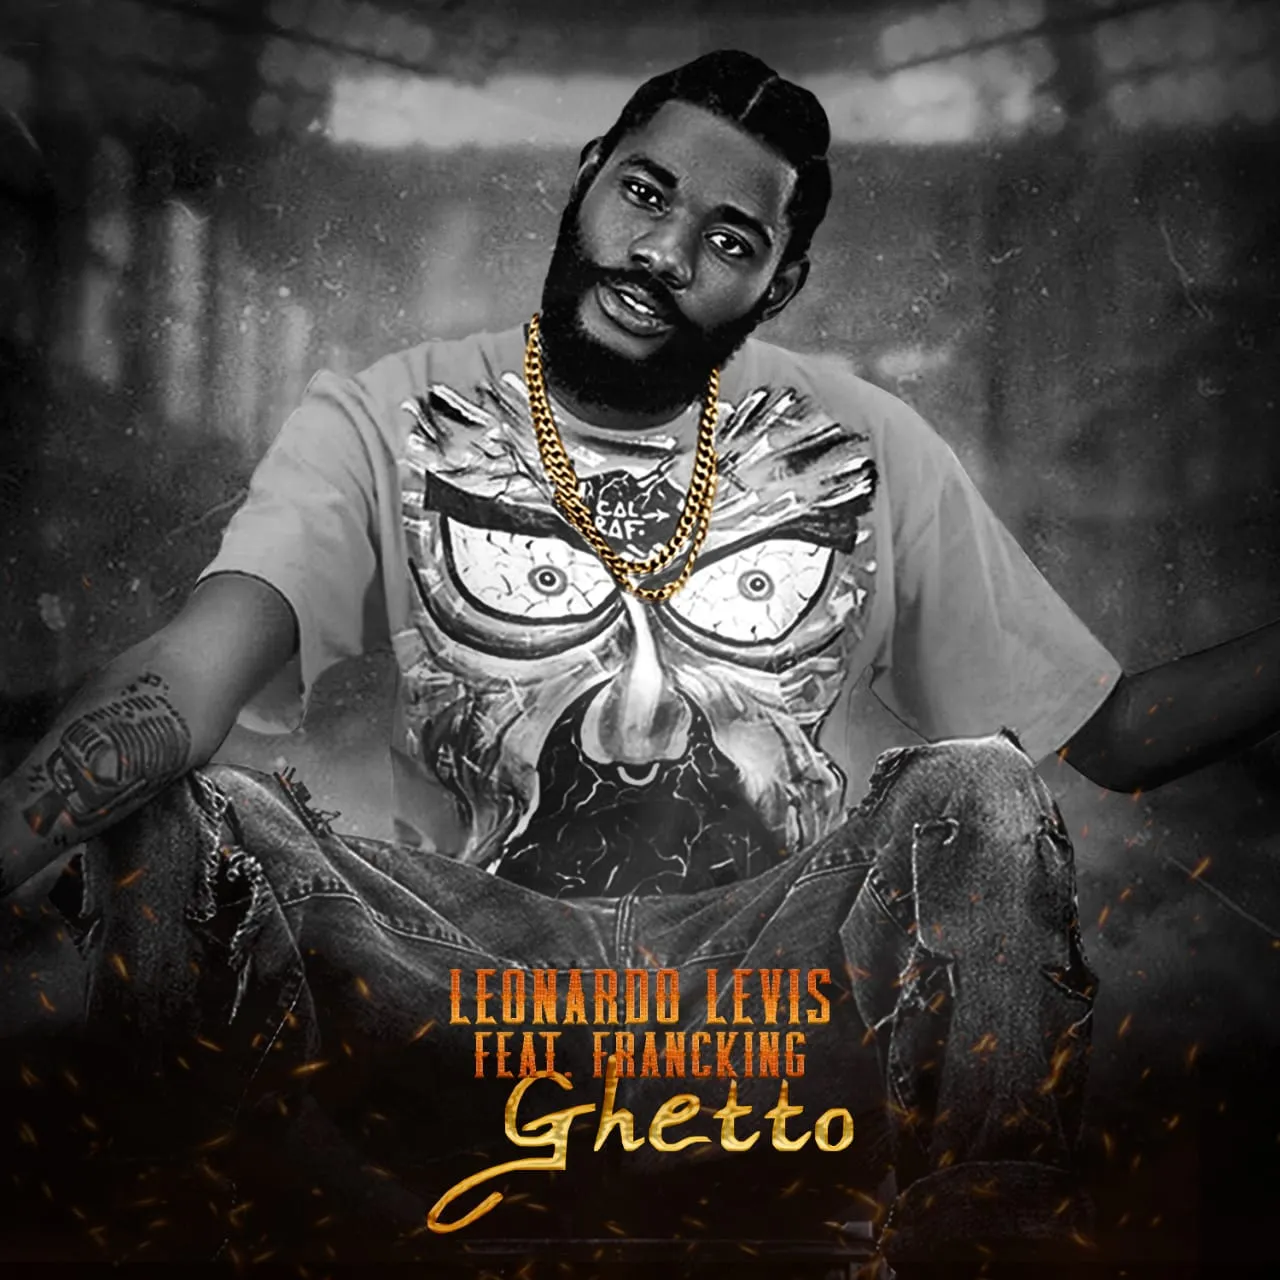 Leonardo Levis - Ghetto (Feat. Francking)